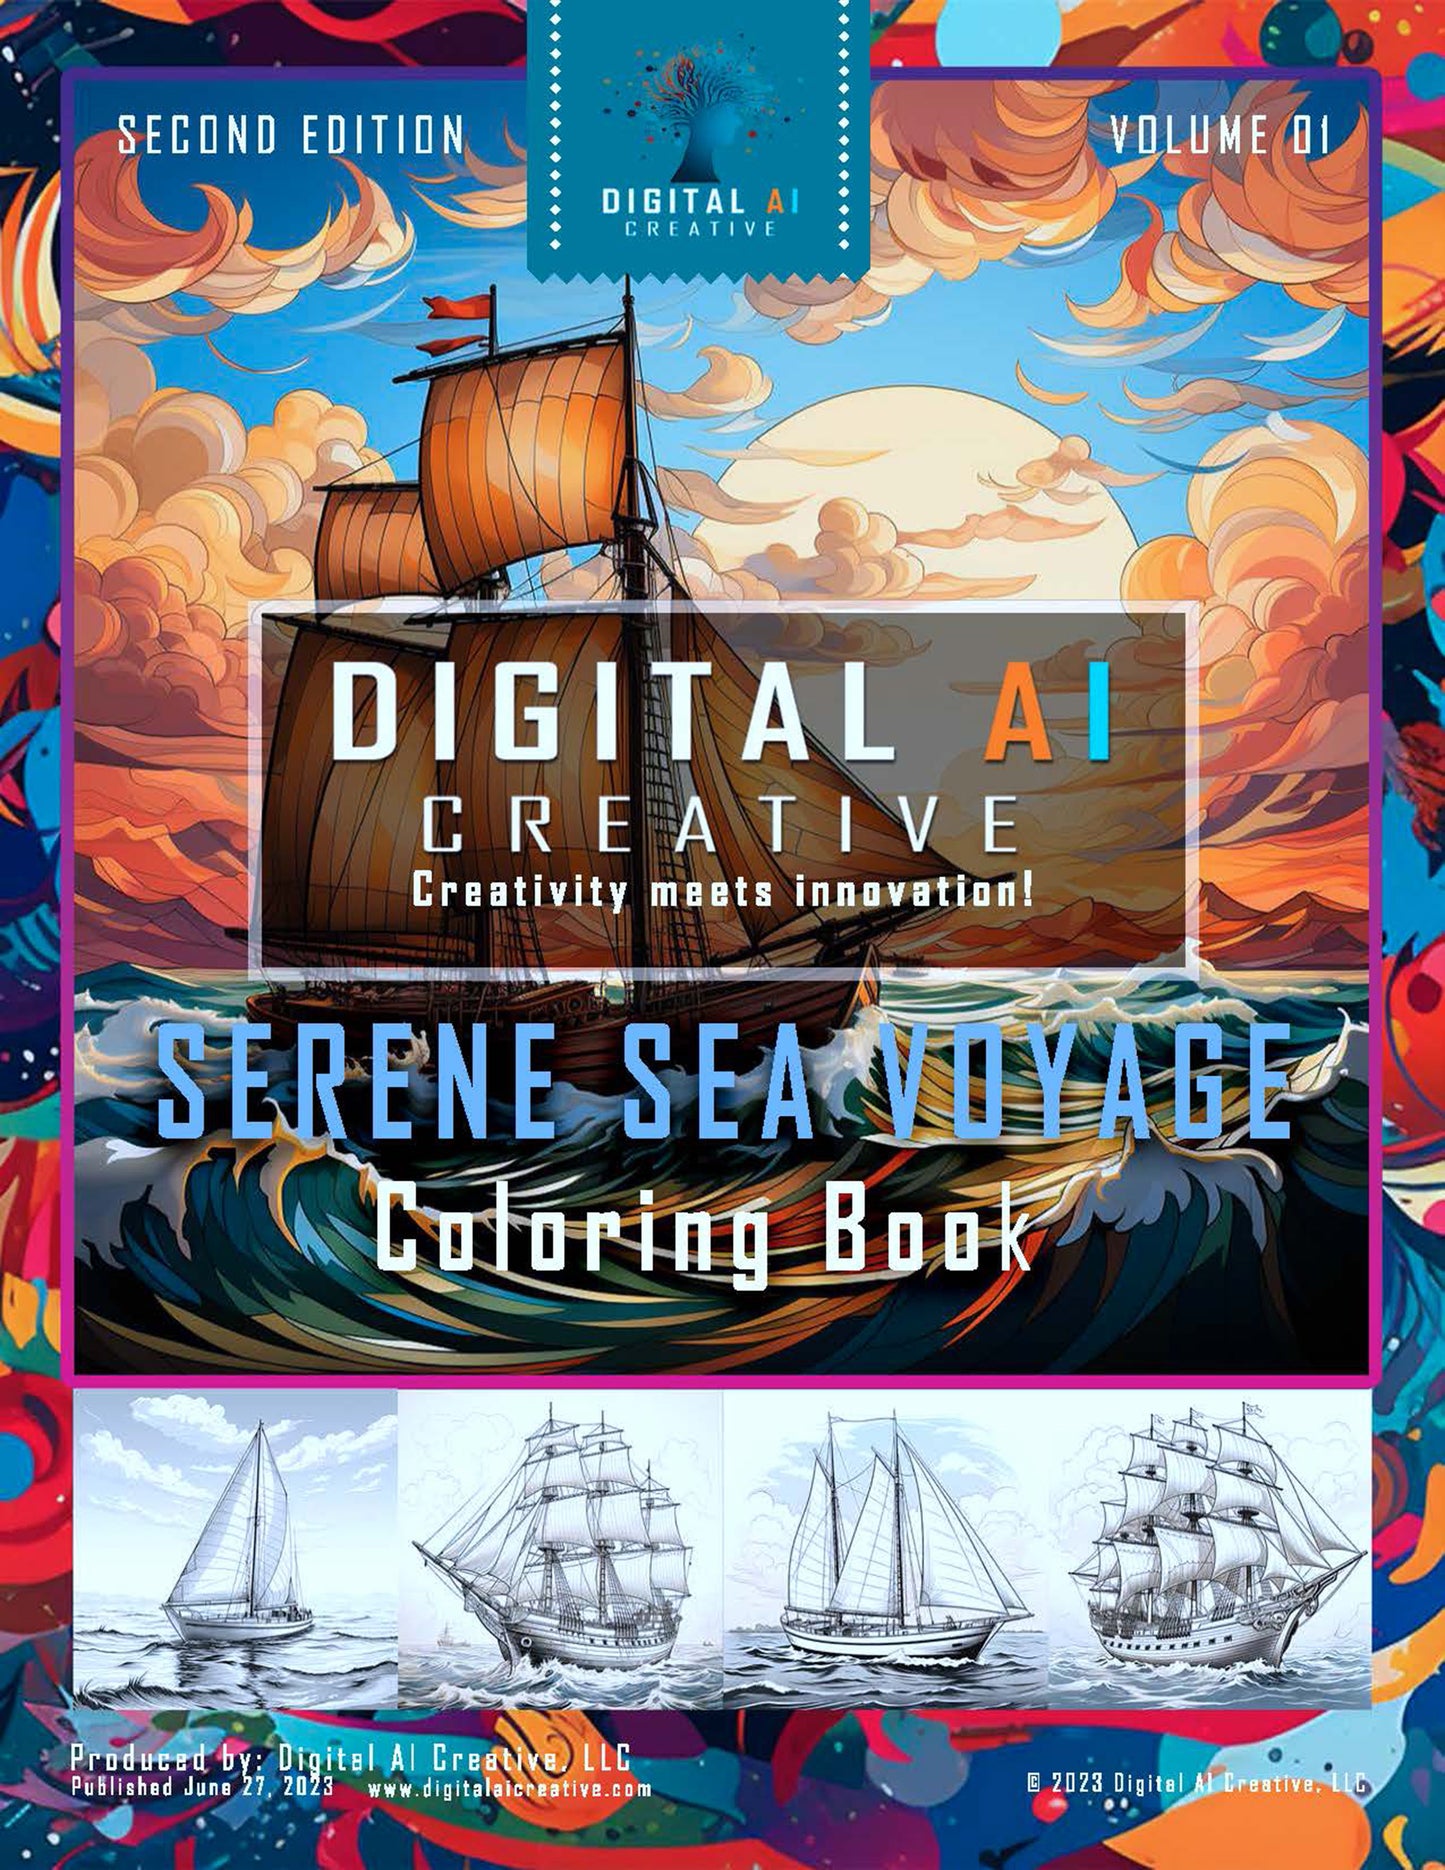 Serene Sea Voyage: A Monochrome Maritime Adventure - Coloring Book! - By Digital AI Creative